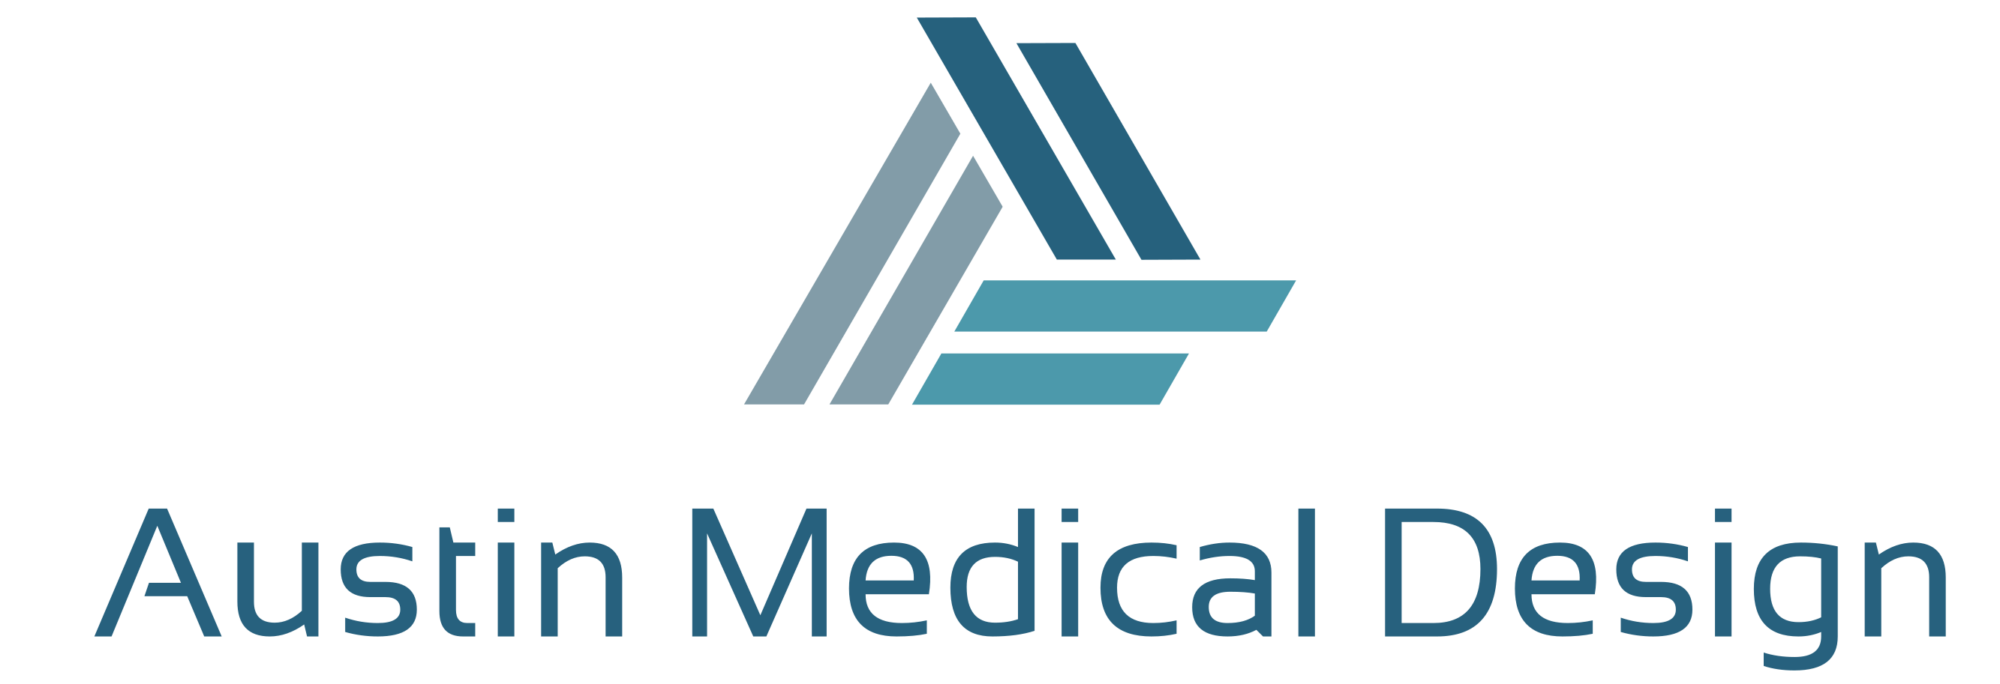 Austin Medical Design